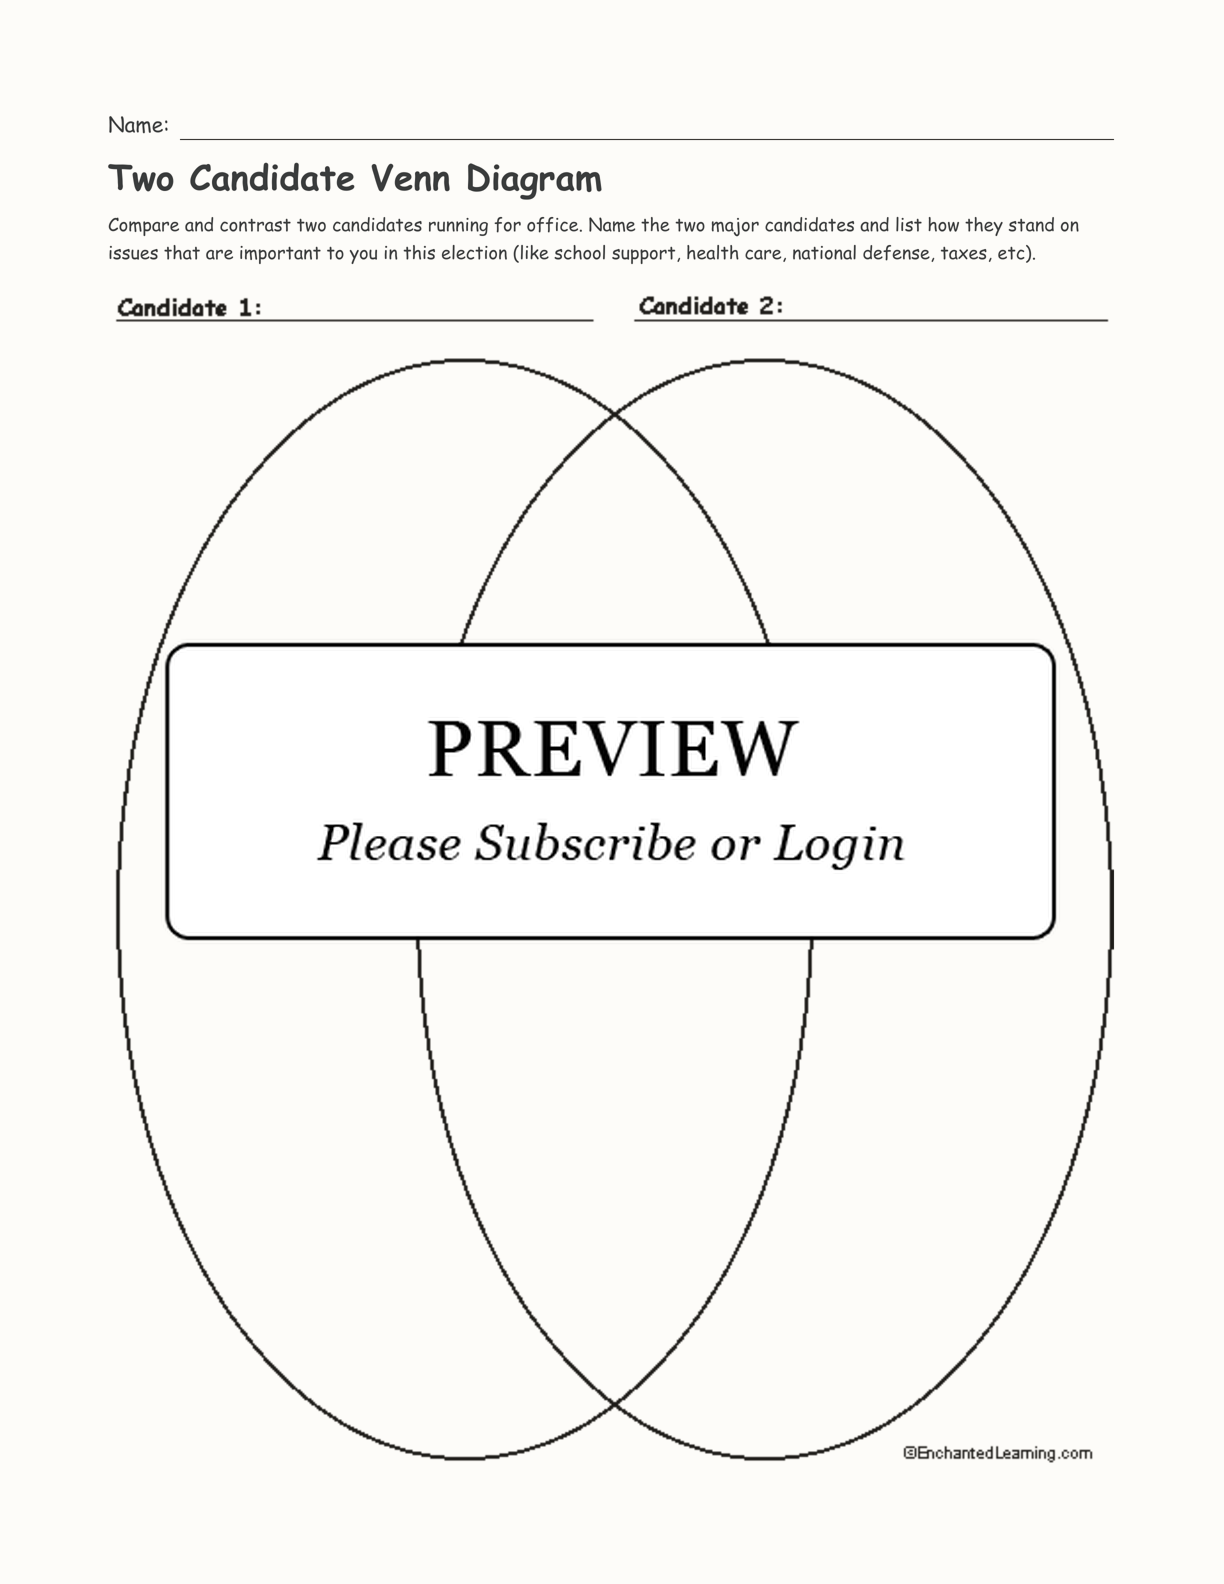 Two Candidate Venn Diagram interactive printout page 1